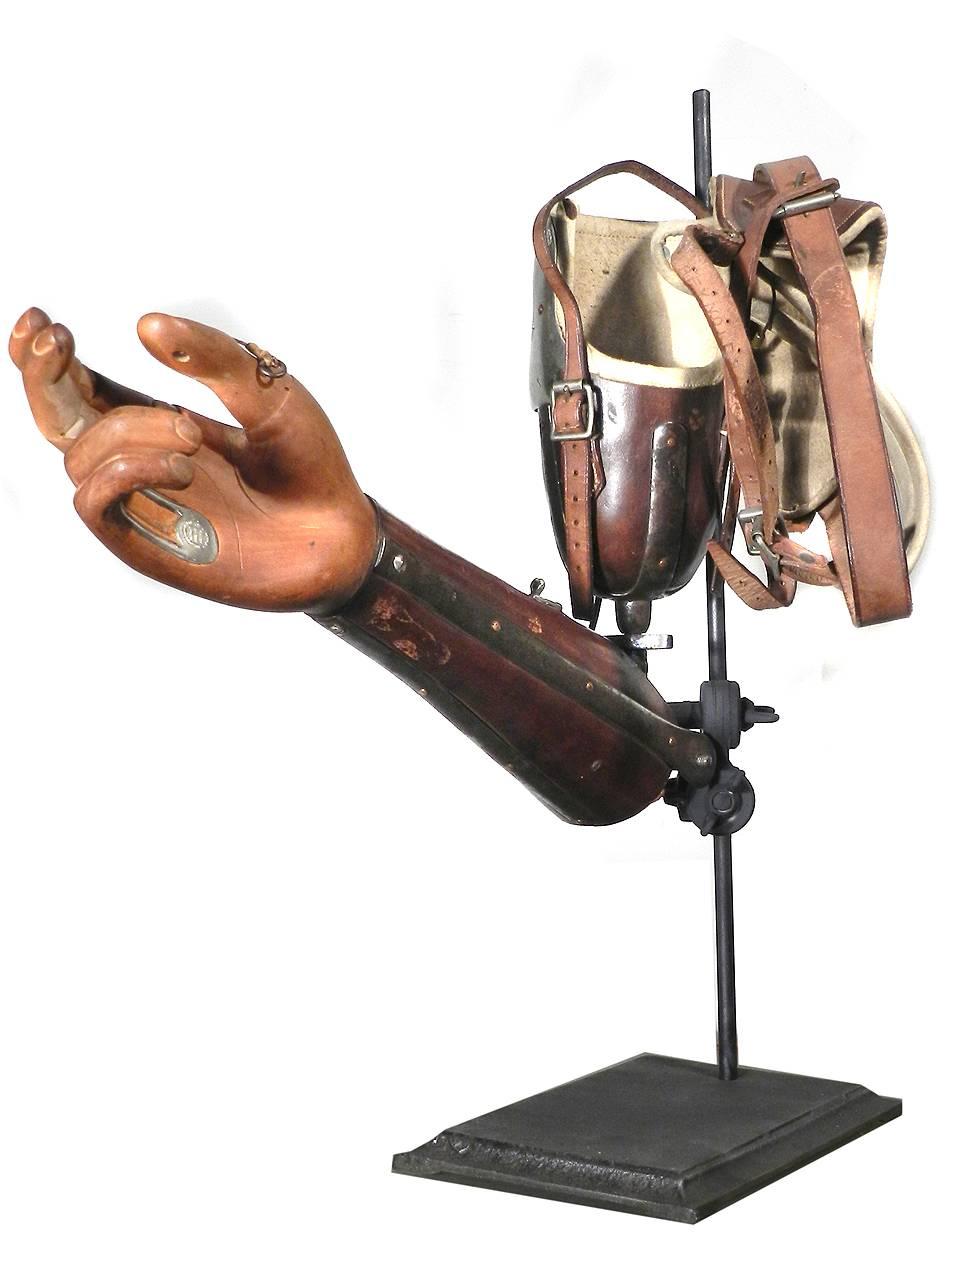 Great Britain (UK) Antique Prosthetic Arm